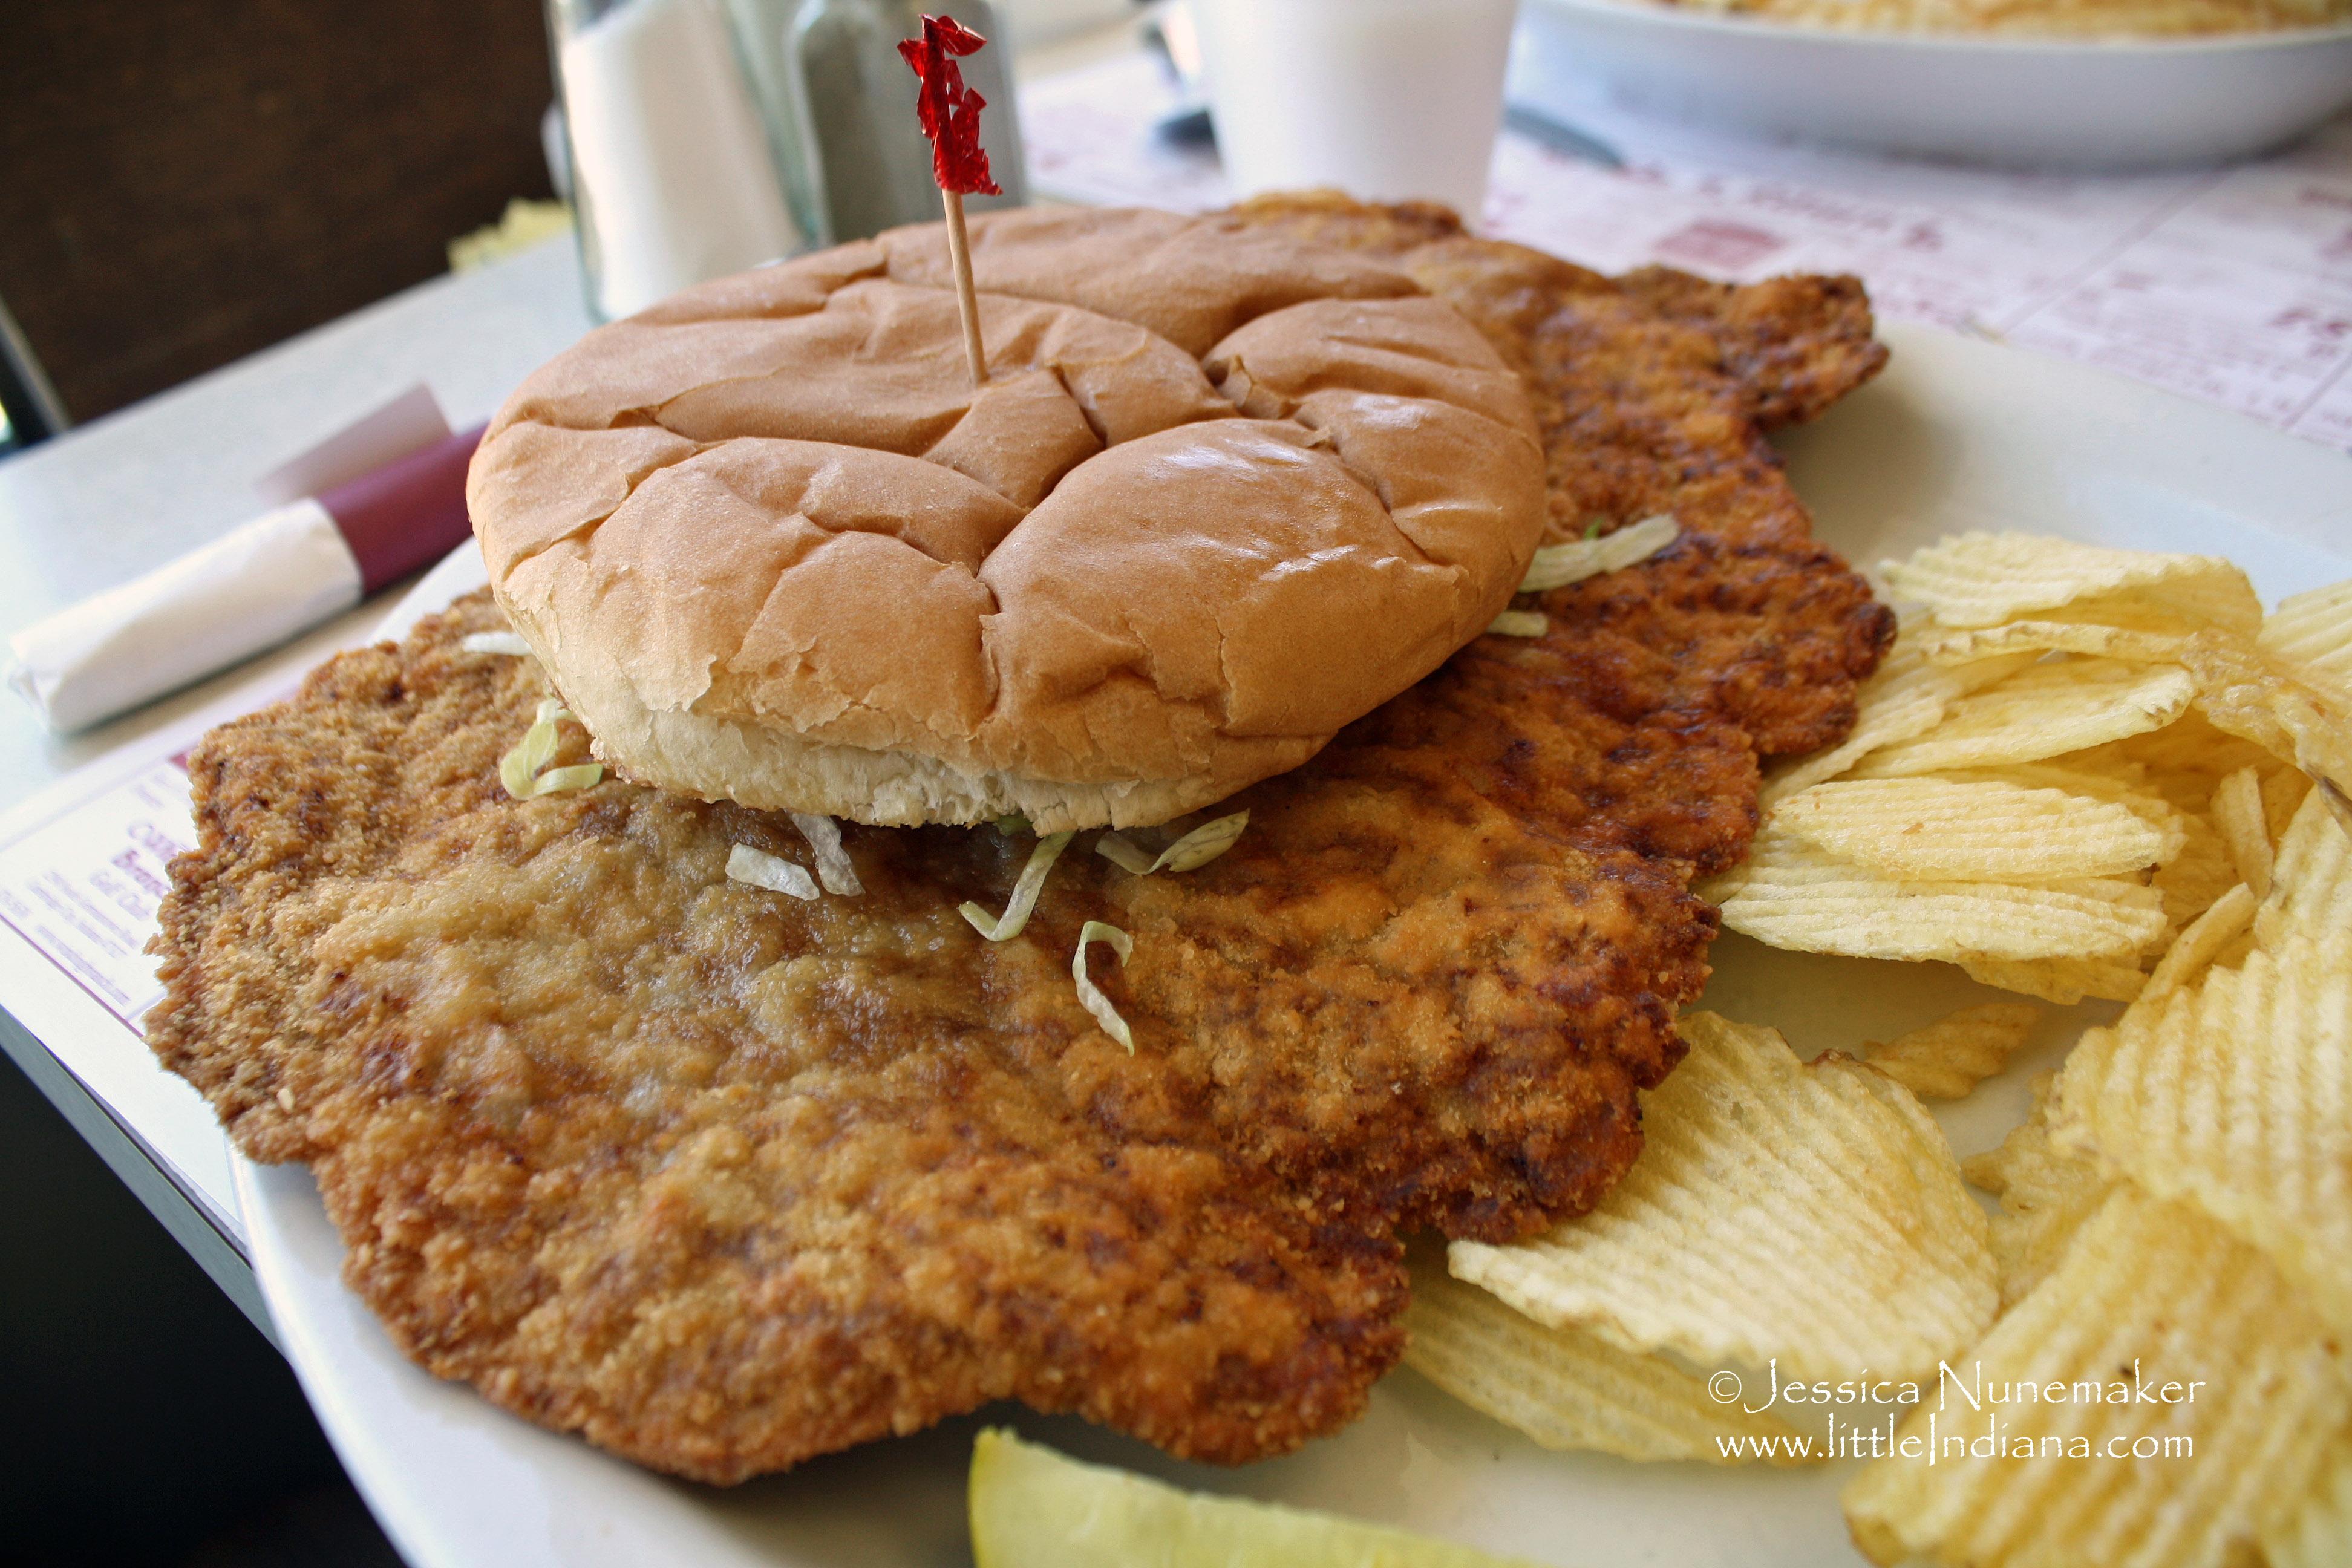 Lumpy's Cafe: Cambridge City, Indiana Pork Tenderloin Sandwich